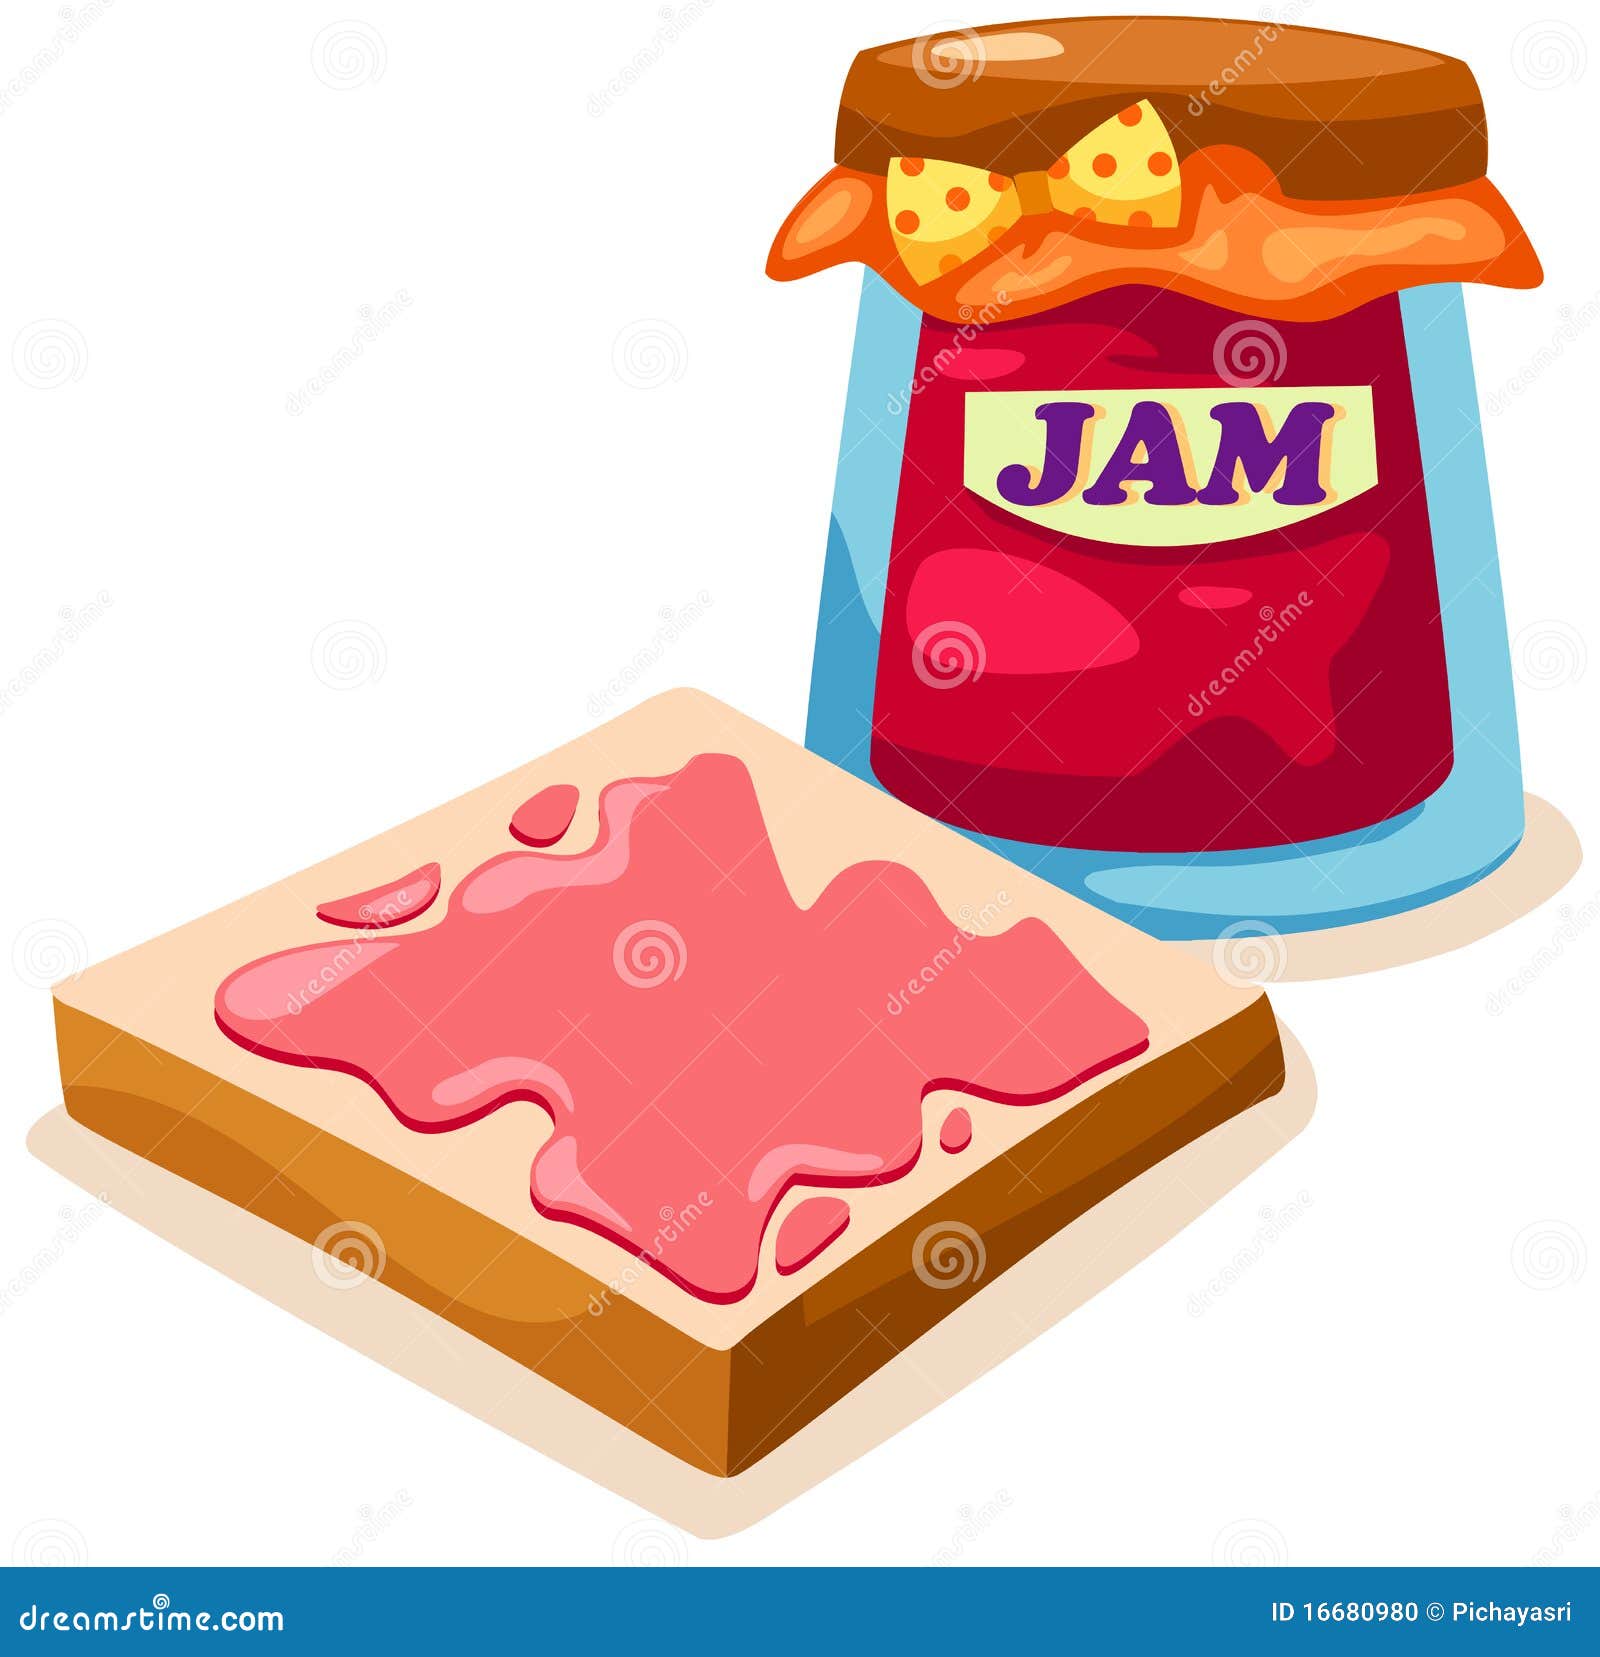 clipart of jam - photo #26